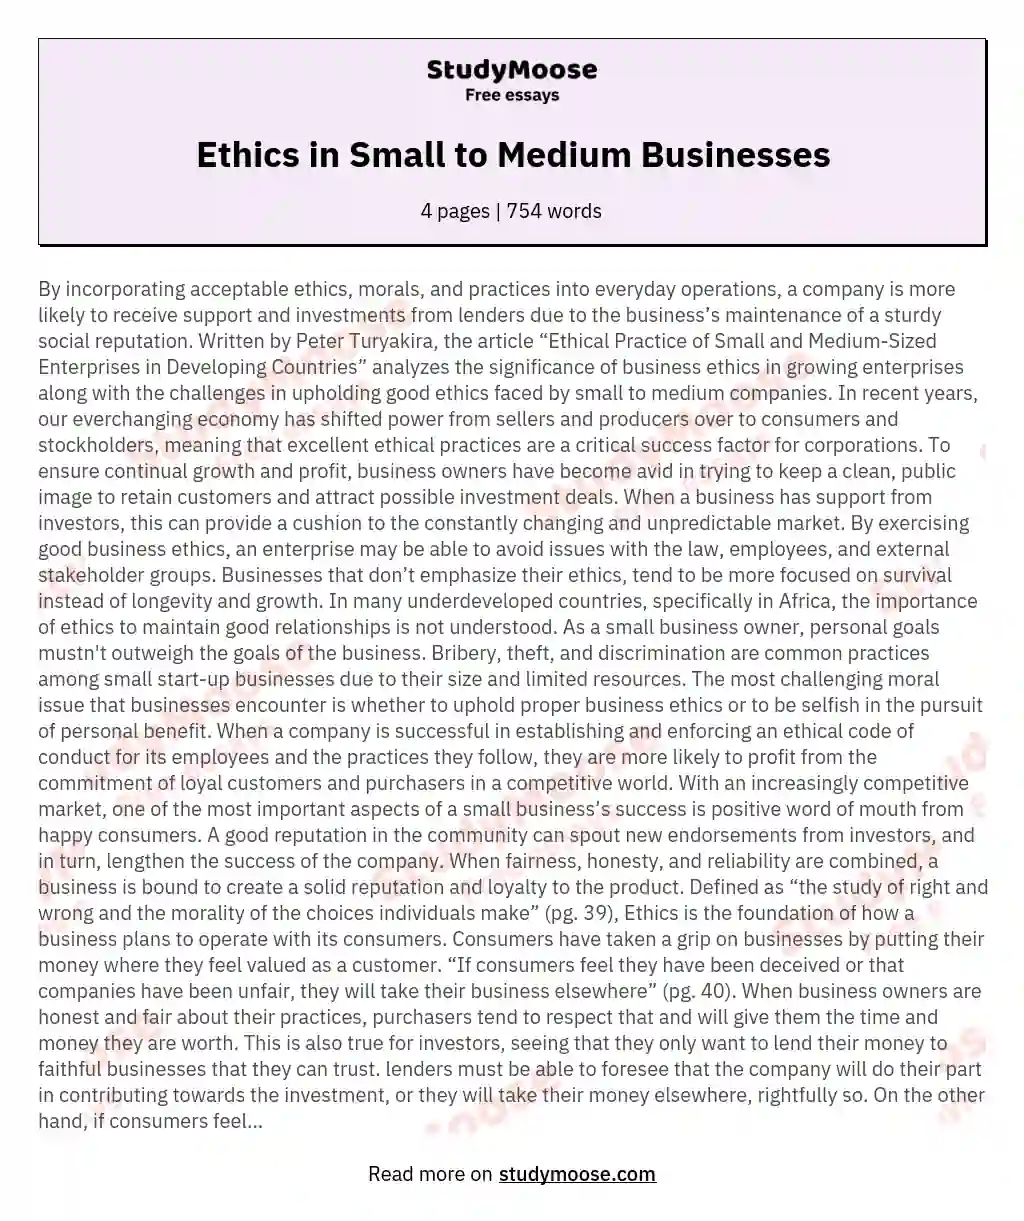 Ethics in Small to Medium Businesses essay